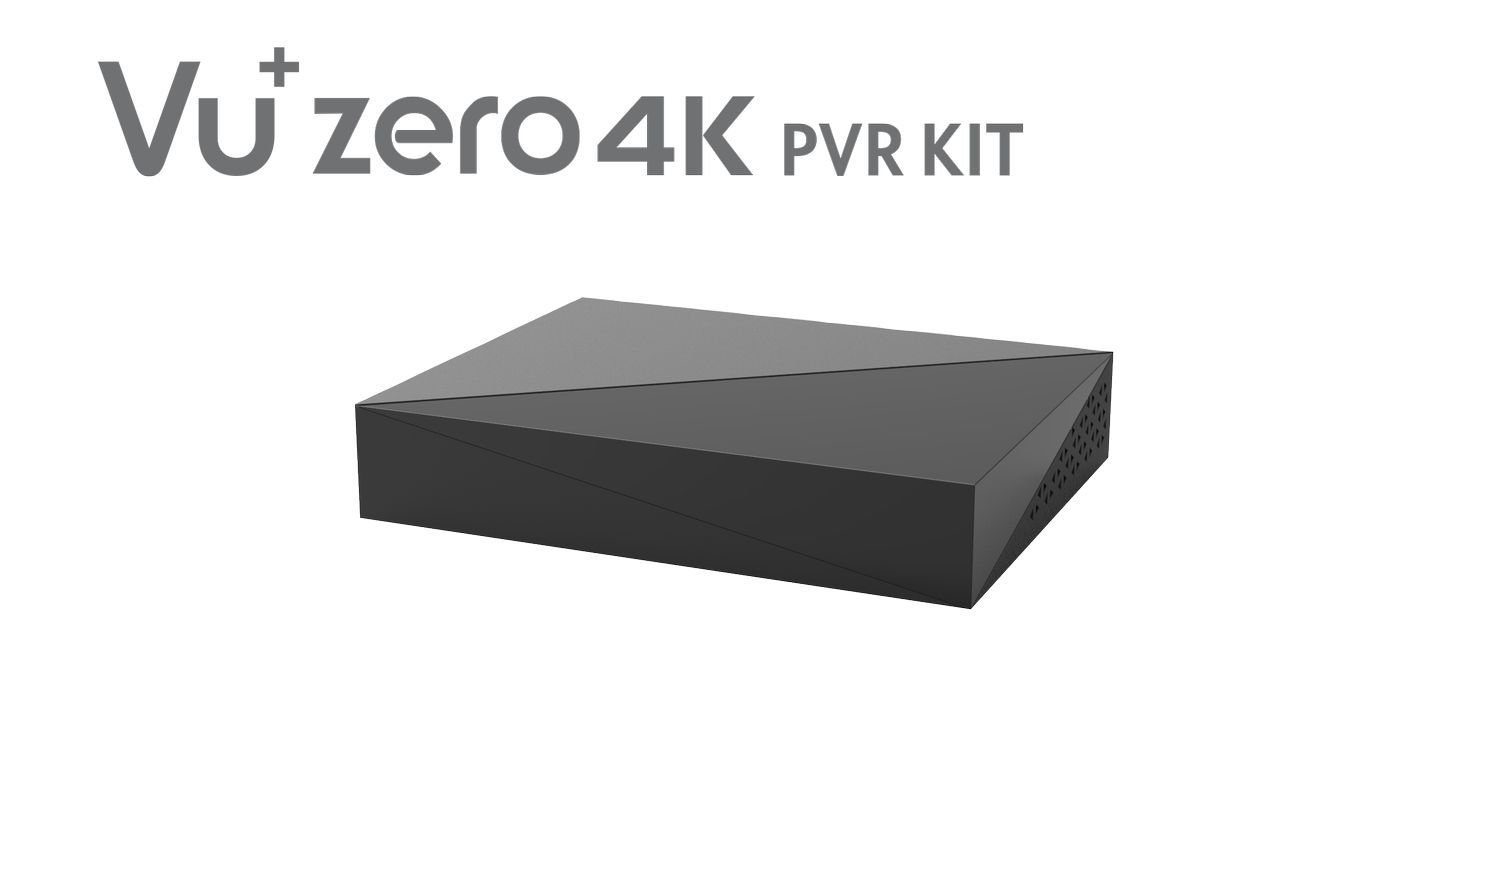 VU+ VU+ 620462 Zero 4K PVR Kit Inklusive HDD, 1TB, schwarz Tuner